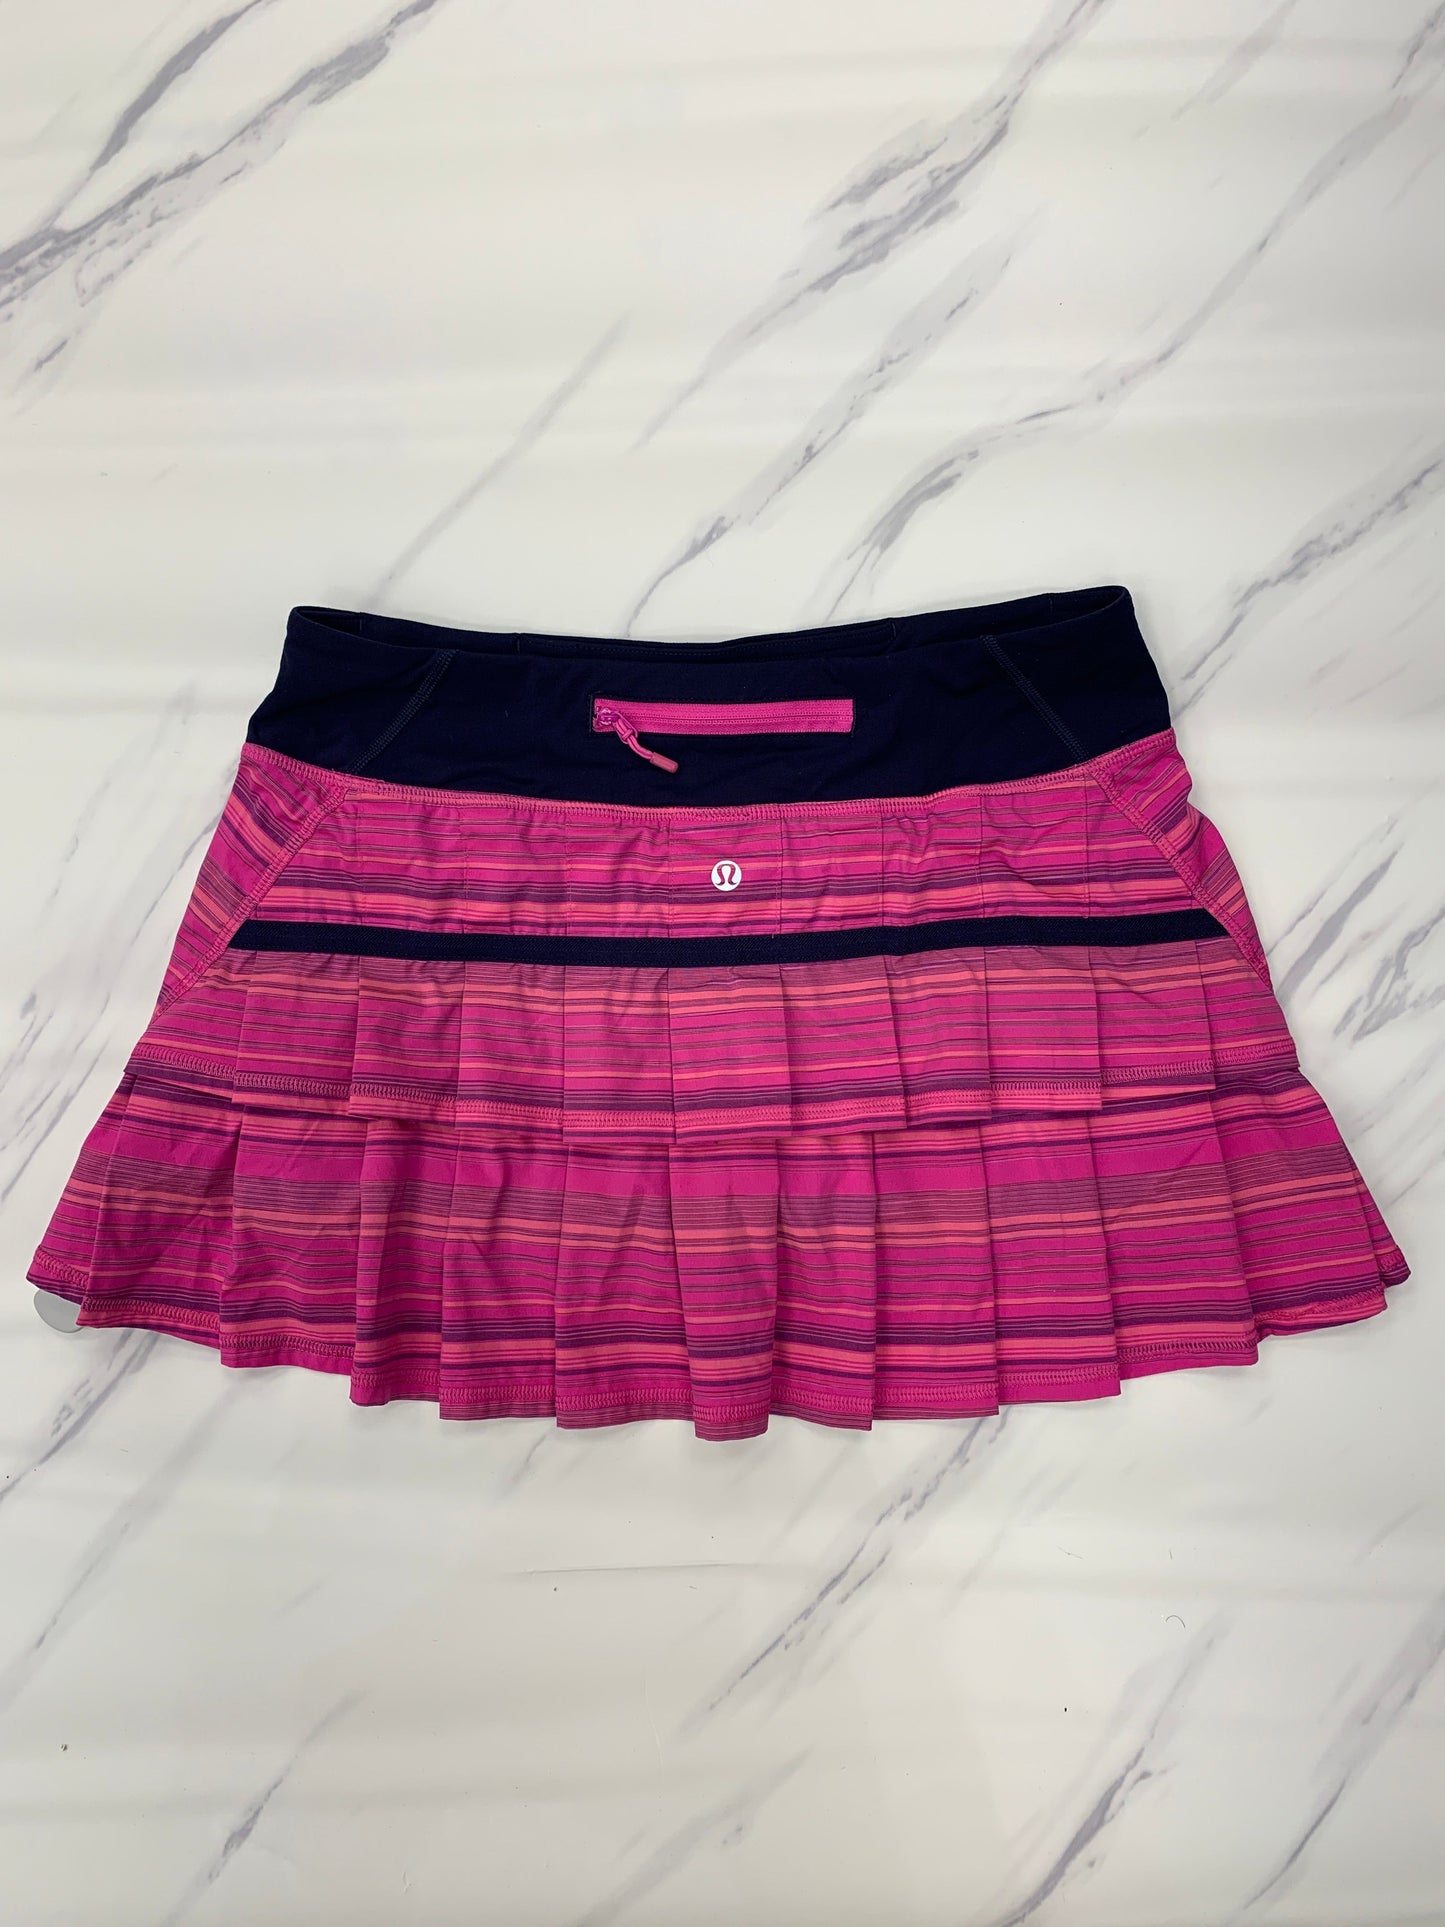 Athletic Skirt Skort By Lululemon  Size: 6